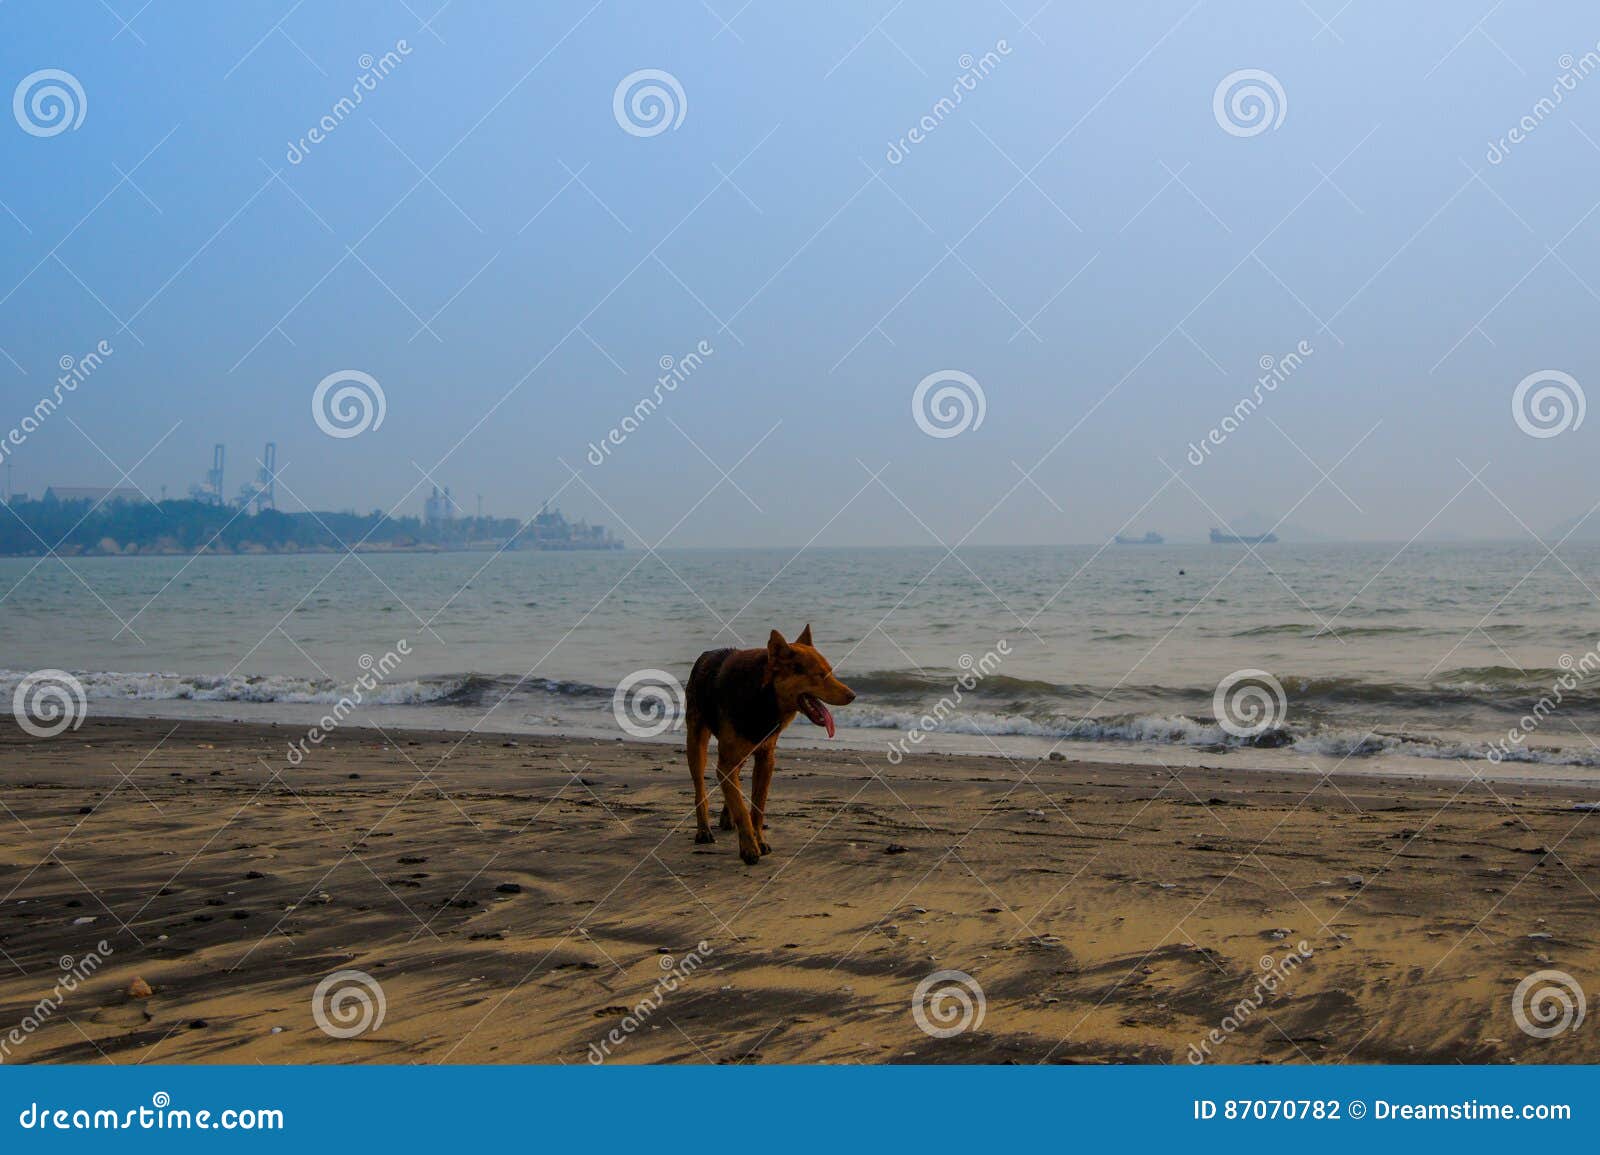 funy dog on the beach